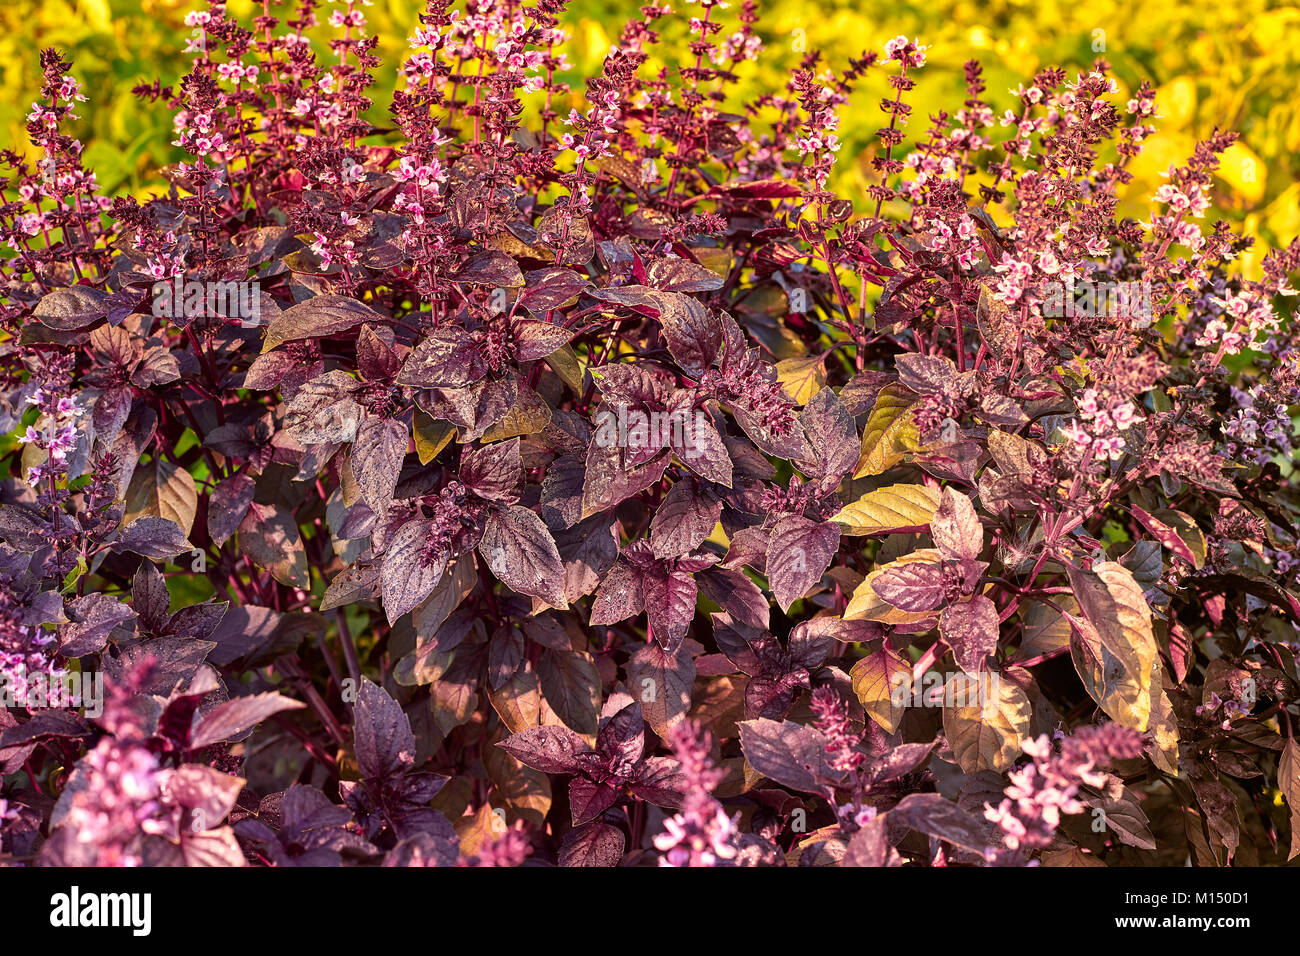 Ocimum, Purple basil. Red bright rubin basil Ocimum basilicum Lamiaceae family Stock Photo